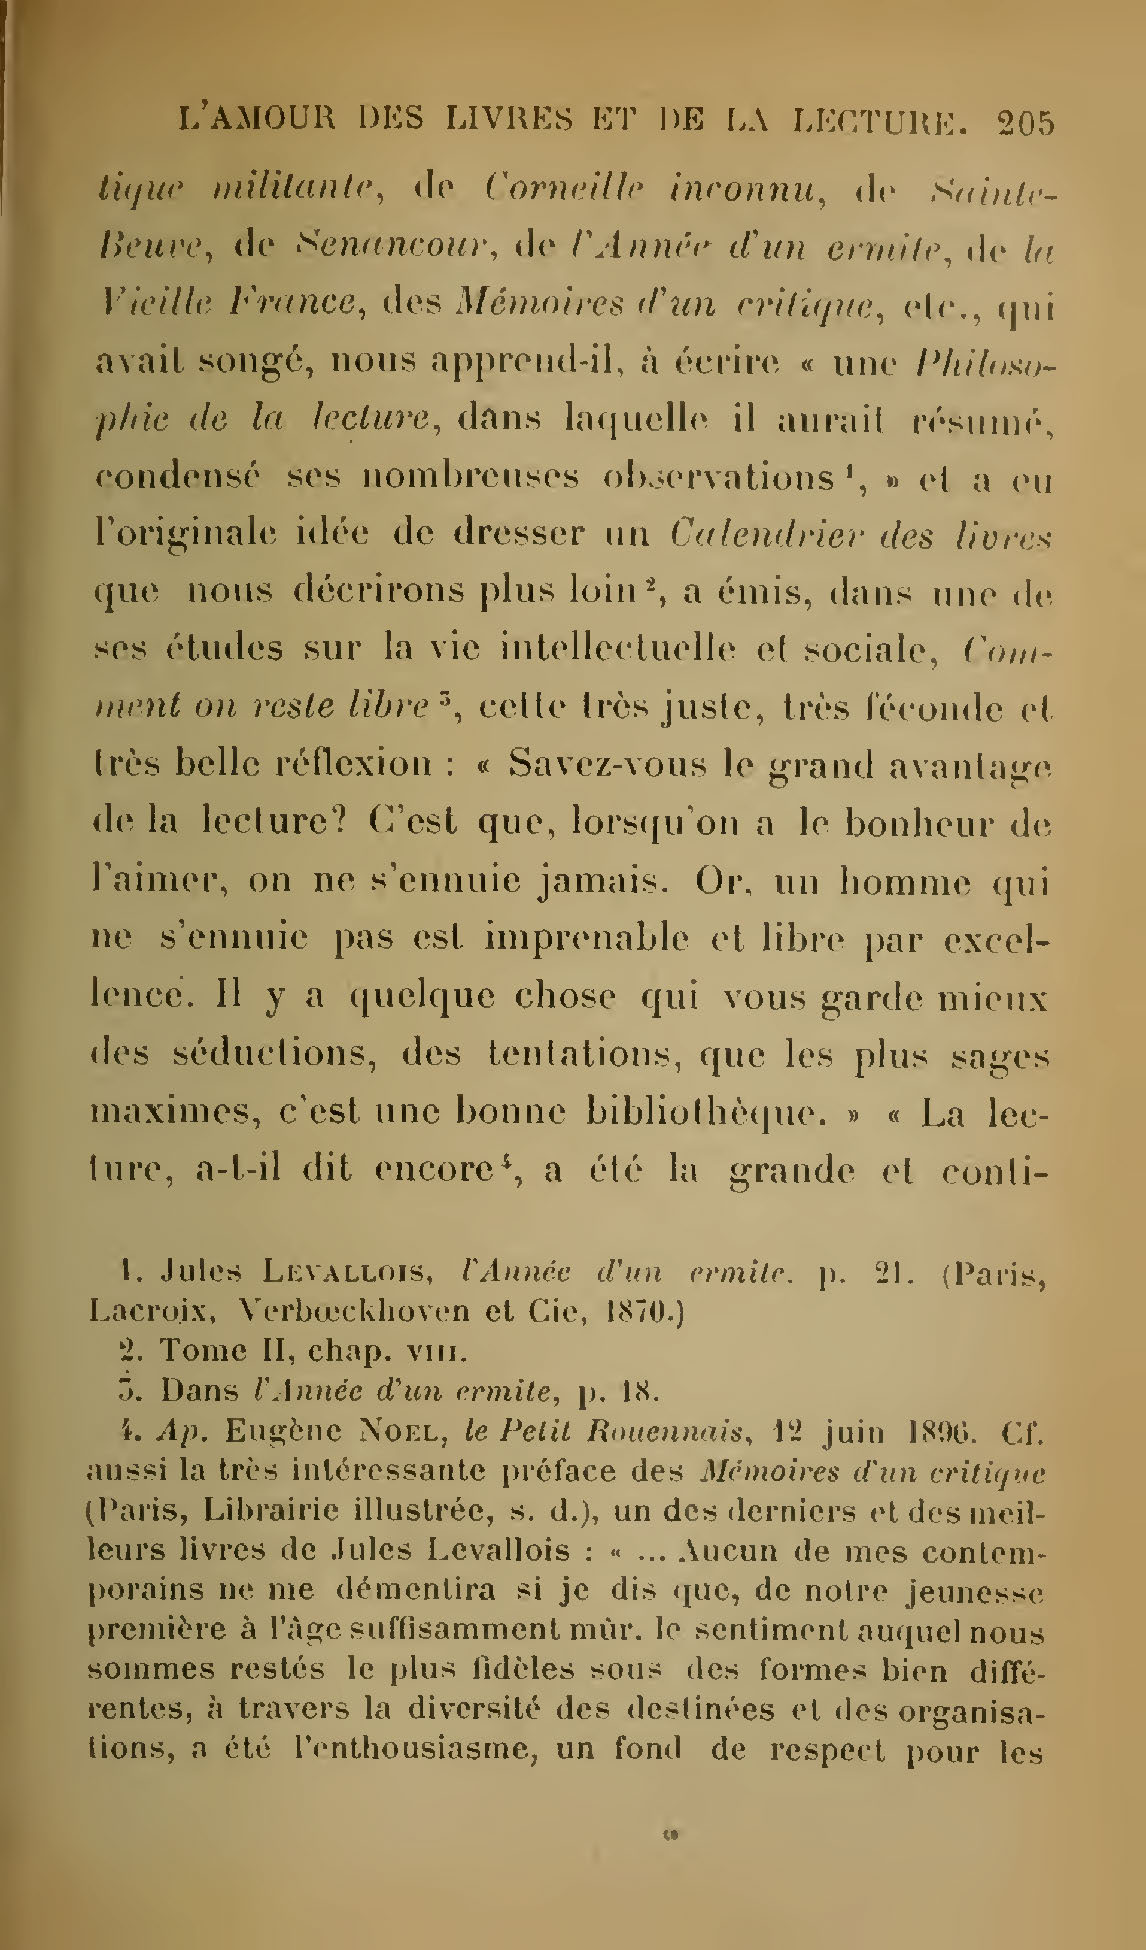 Albert Cim, Le Livre, t. I, p. 205.